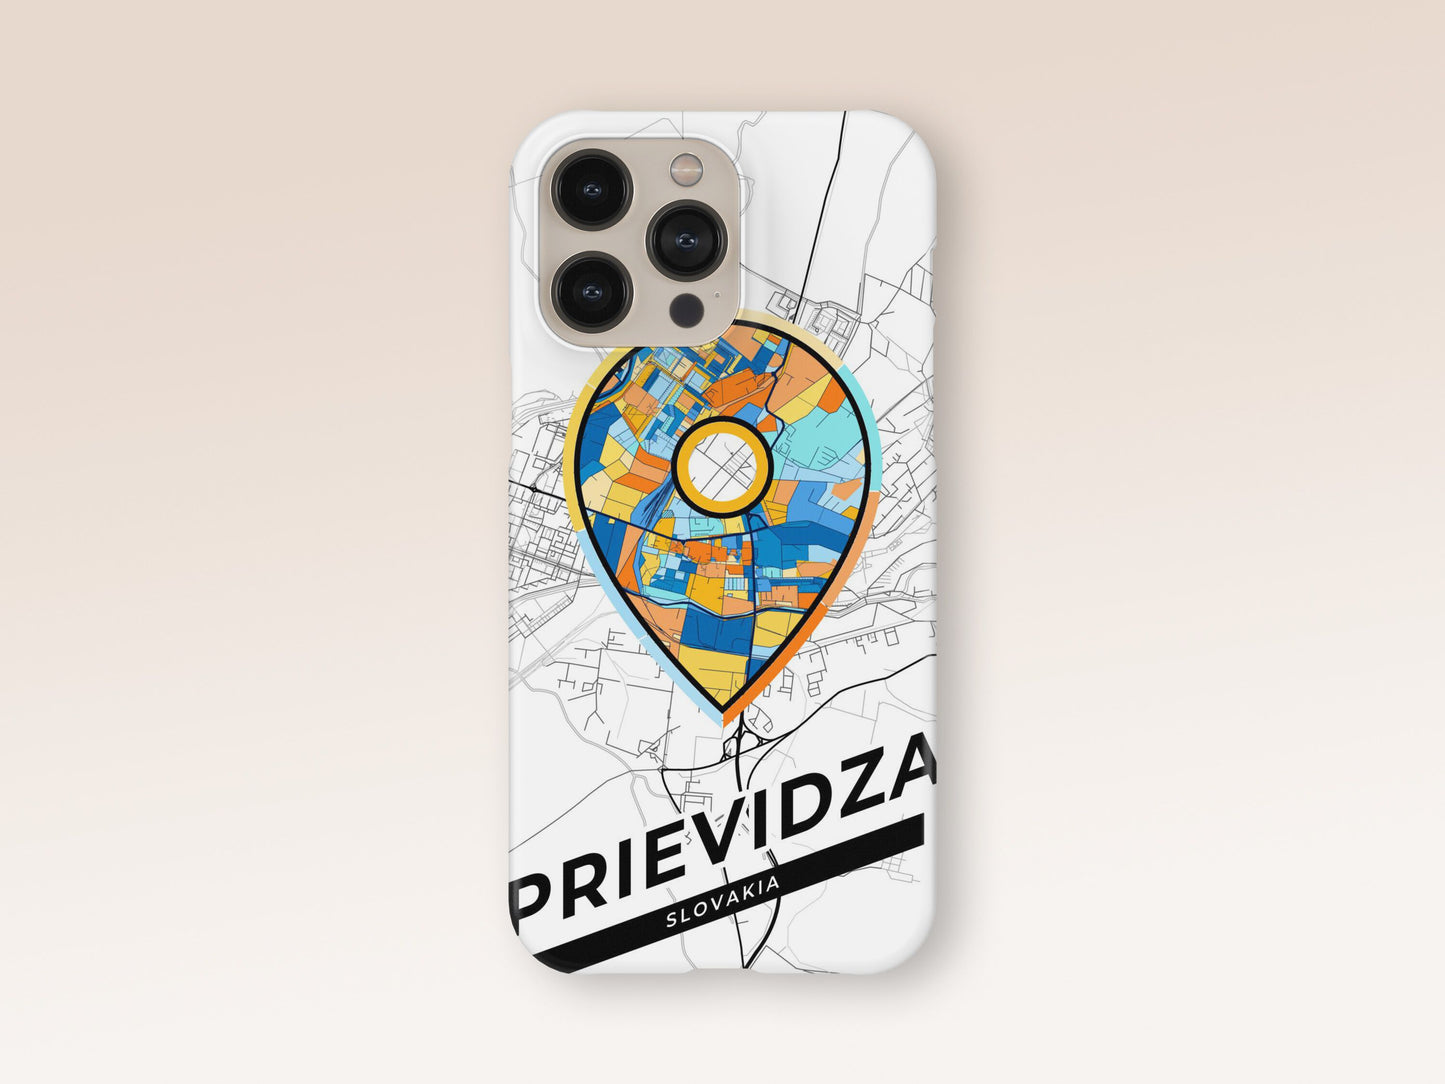 Prievidza Slovakia slim phone case with colorful icon. Birthday, wedding or housewarming gift. Couple match cases. 1